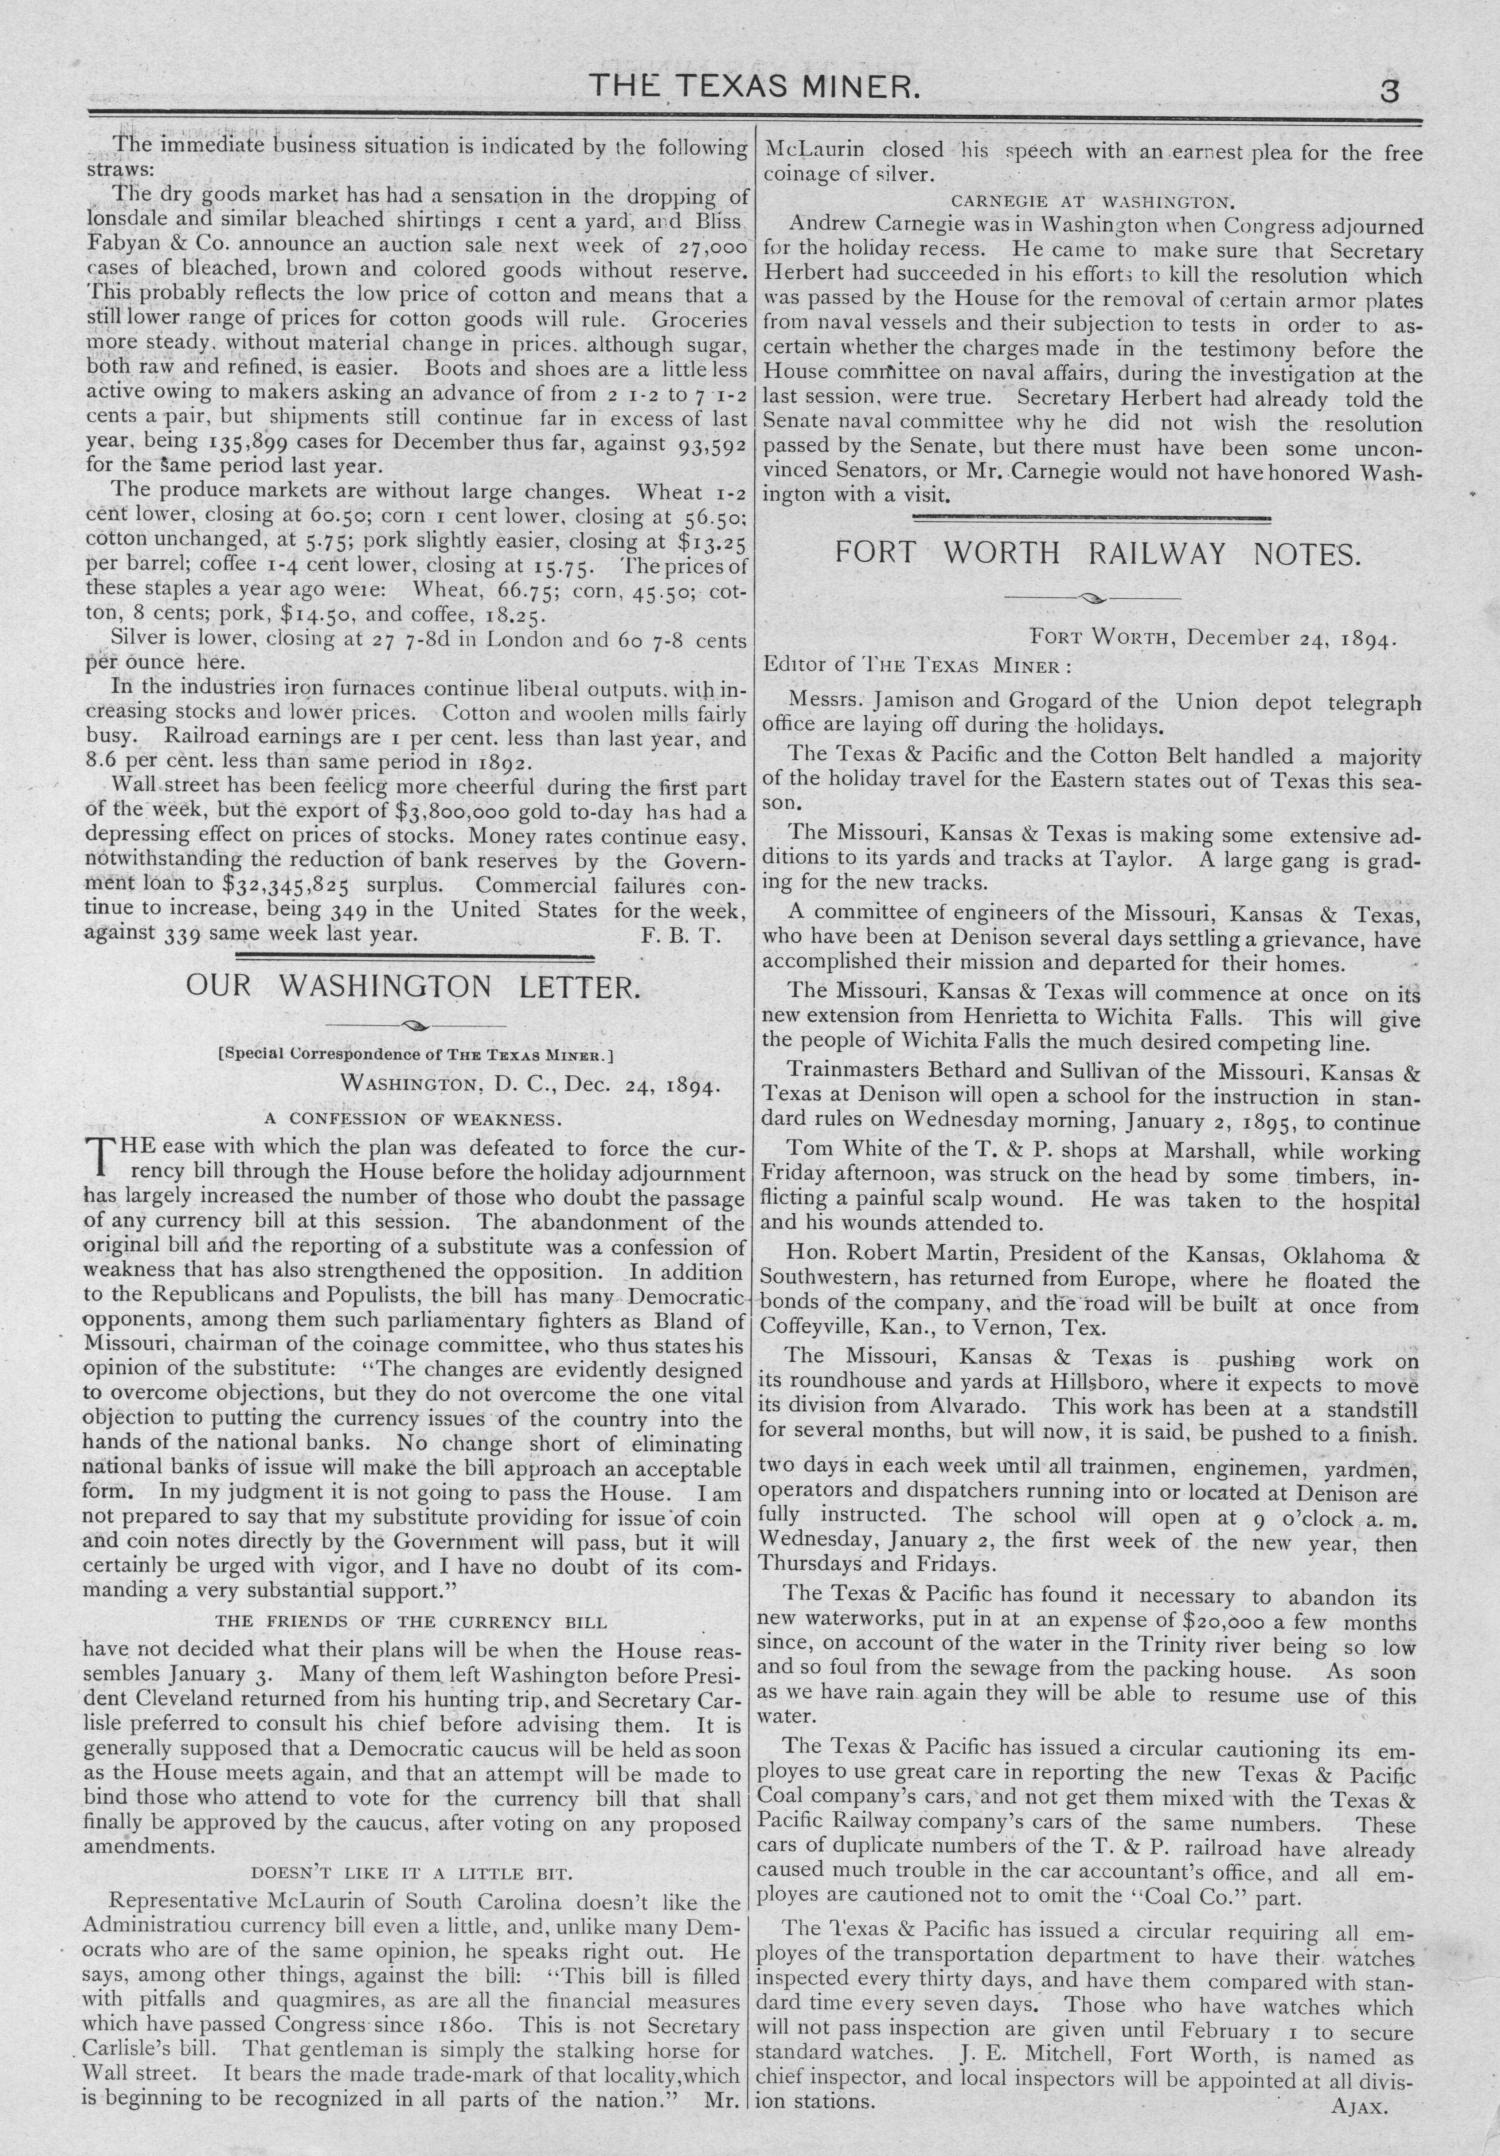 The Texas Miner, Volume 1, Number 50, December 29, 1894
                                                
                                                    3
                                                